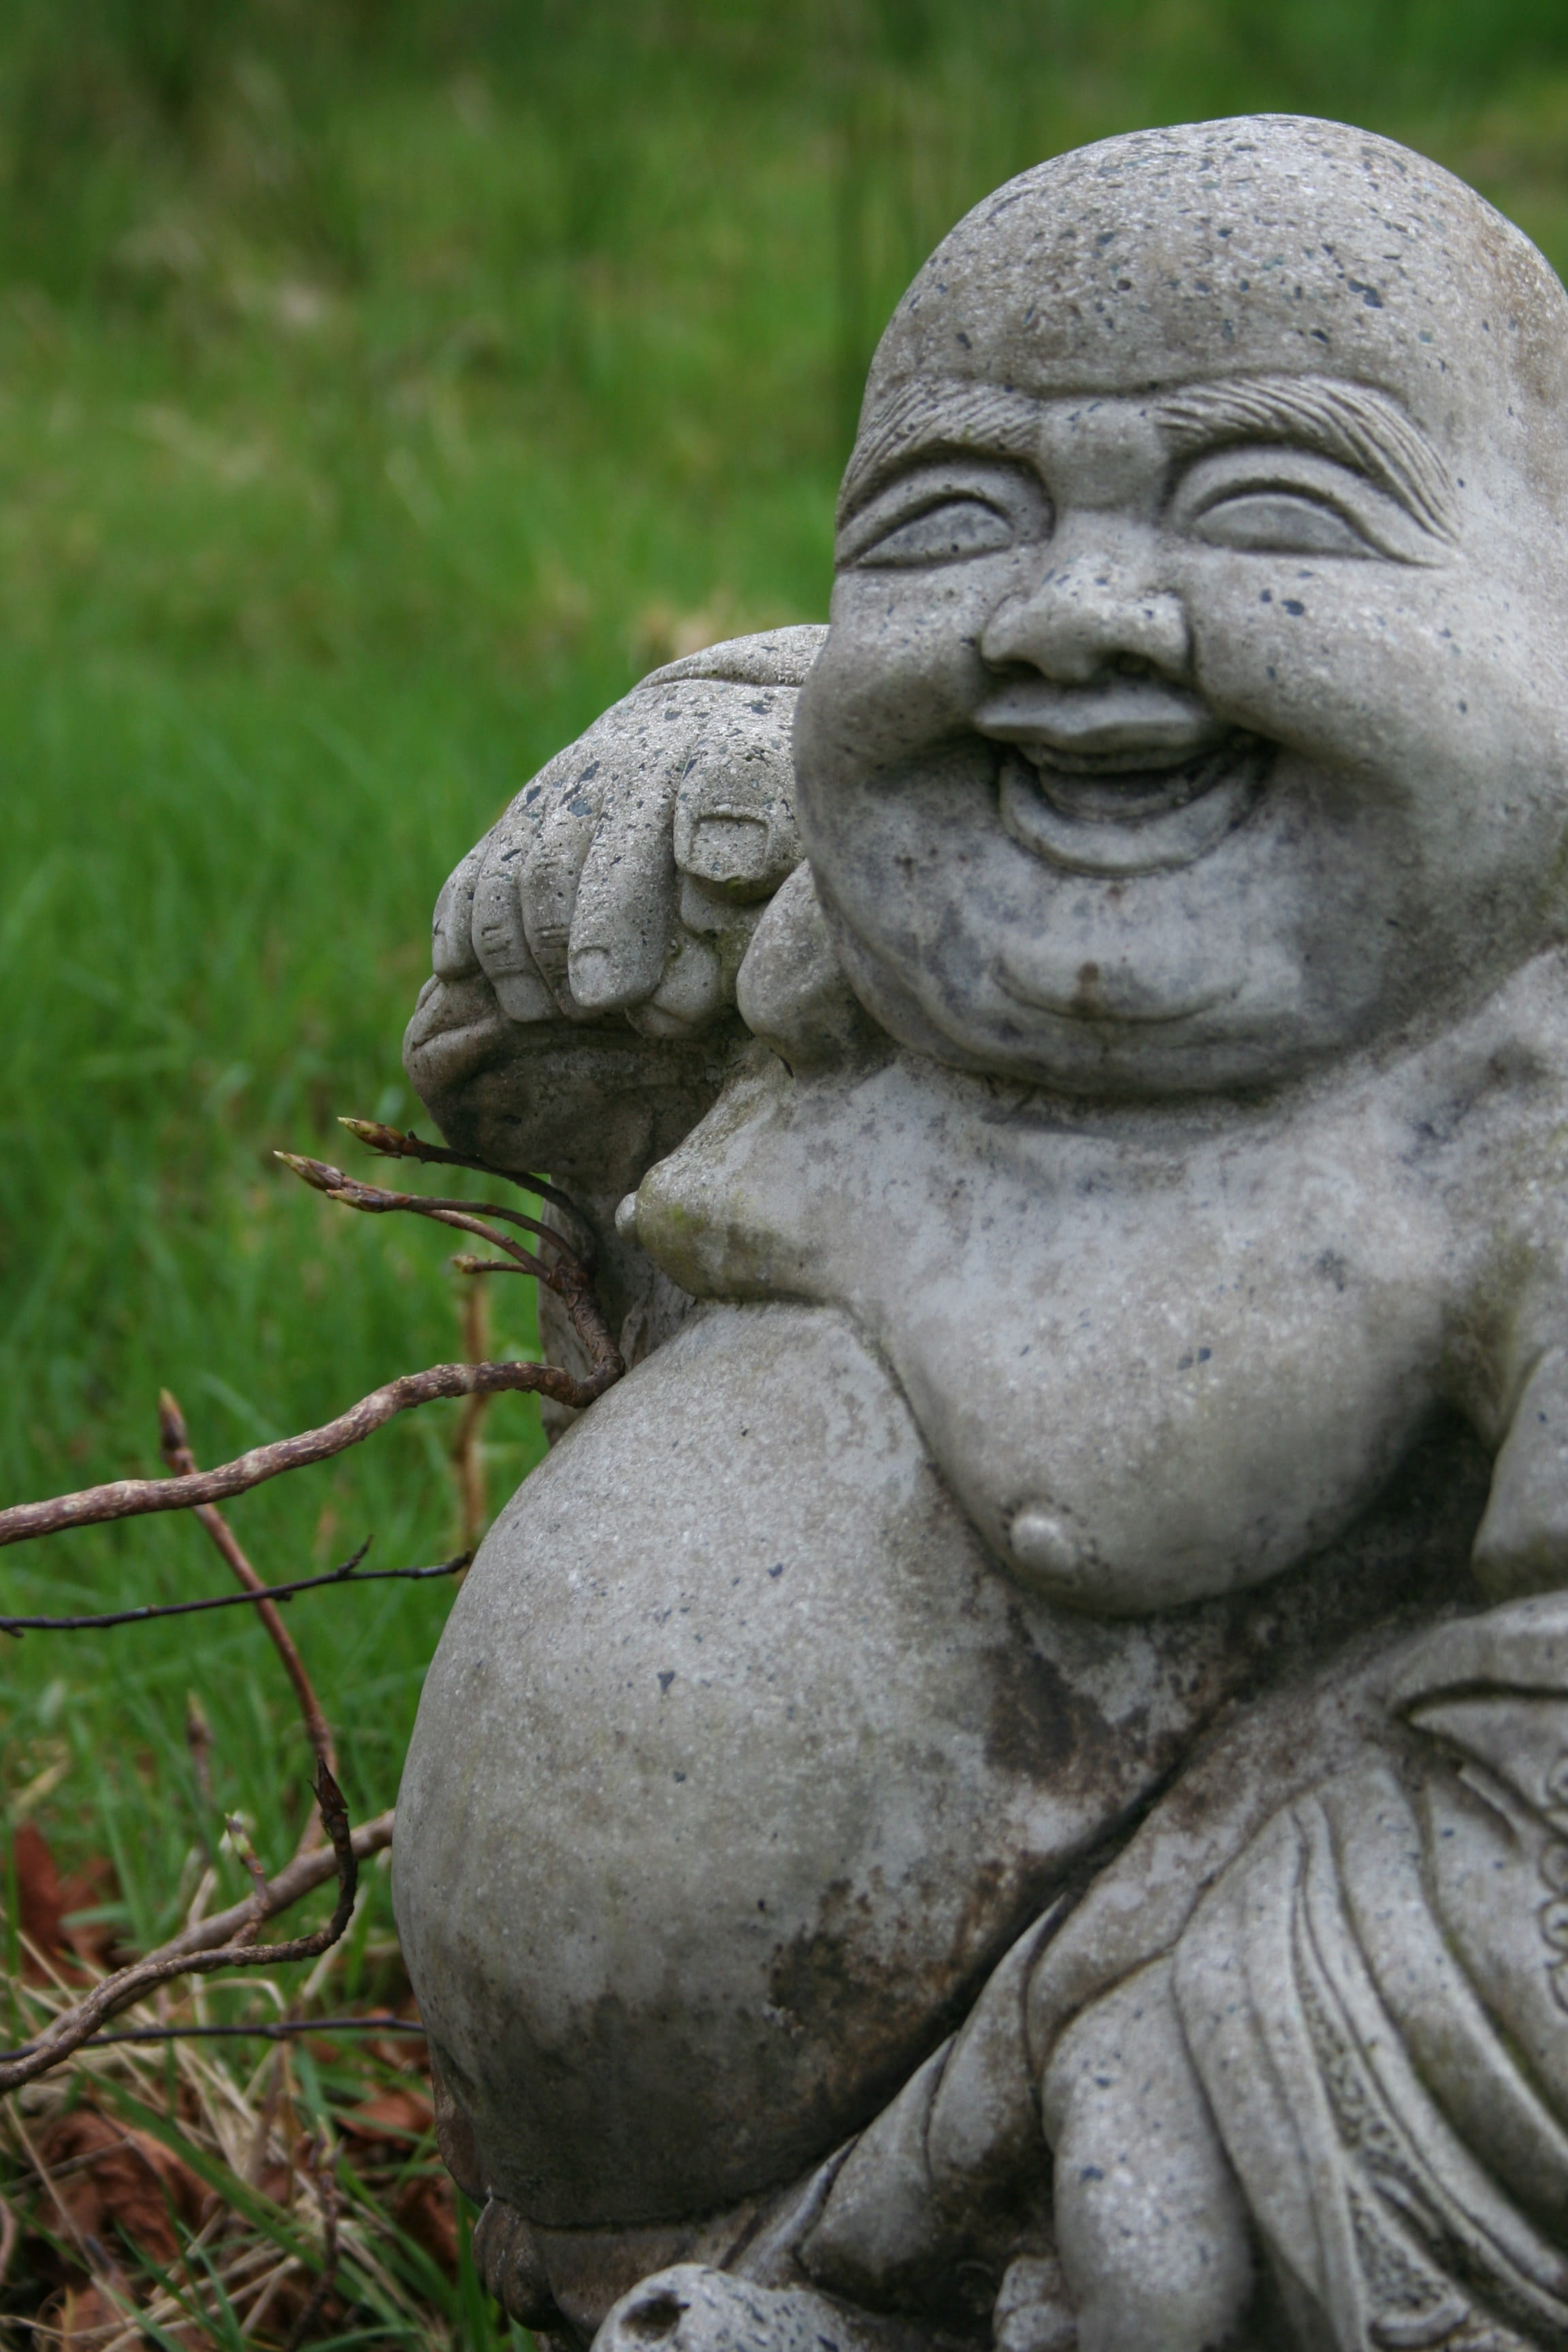 garden, status, laughing, laughing buddha statue, fun, funny